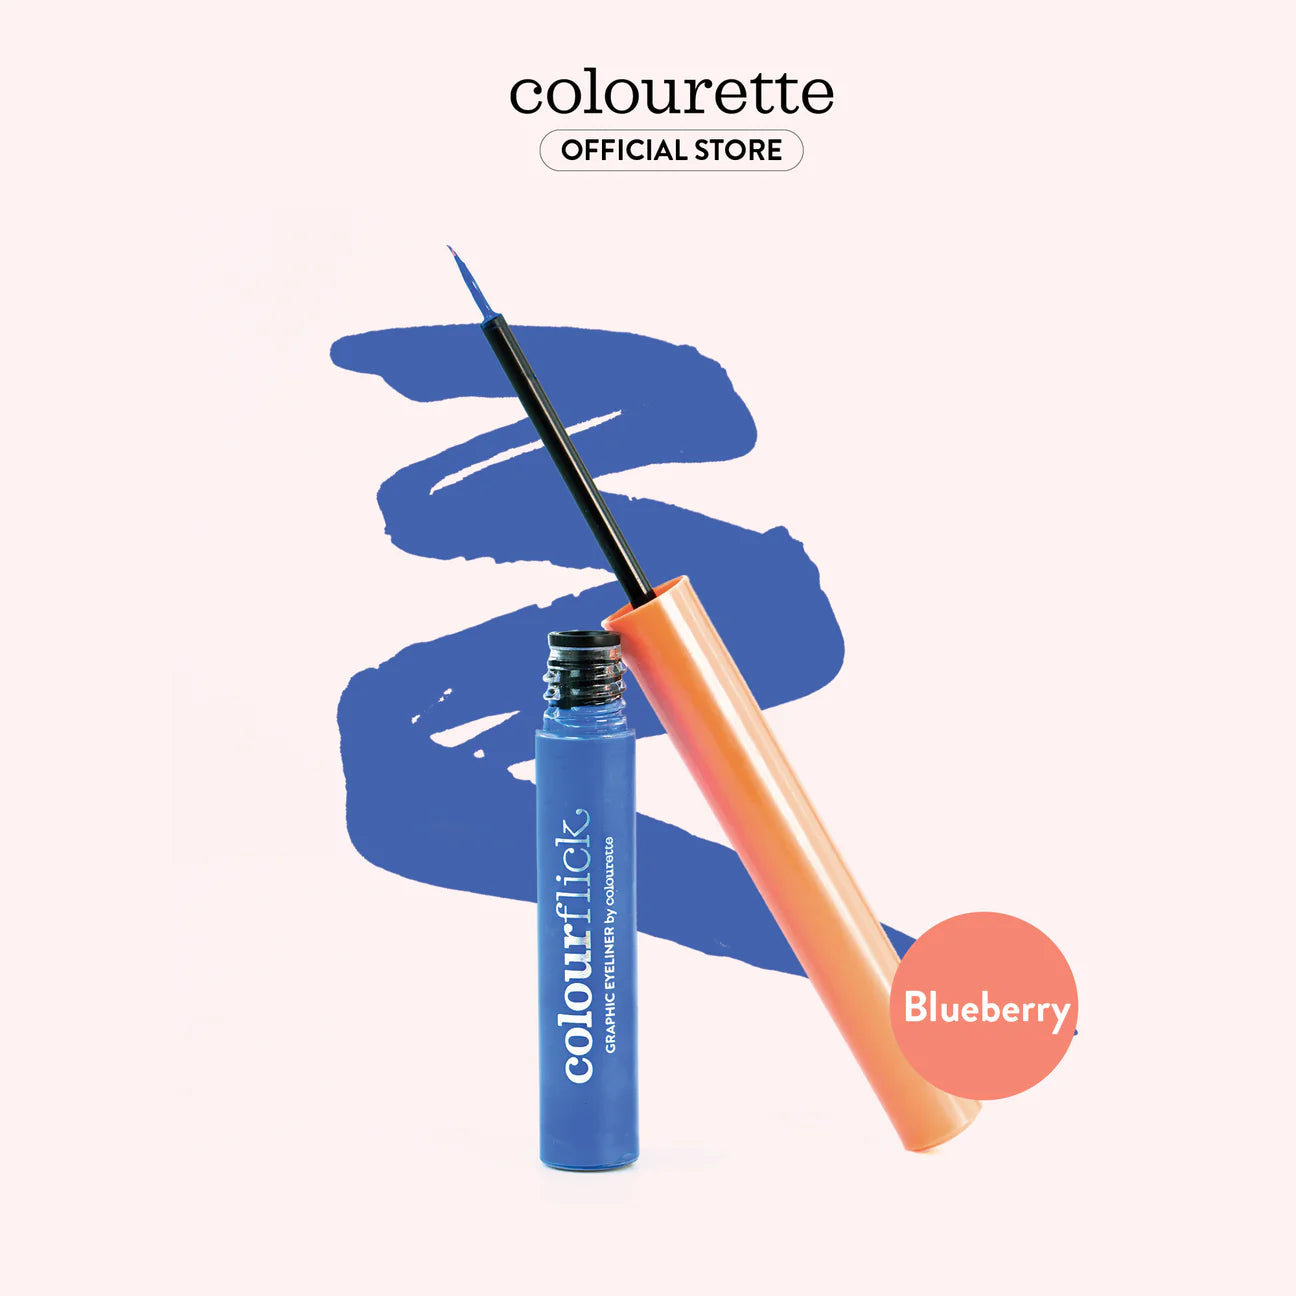 Colourflick Graphic Eyeliner